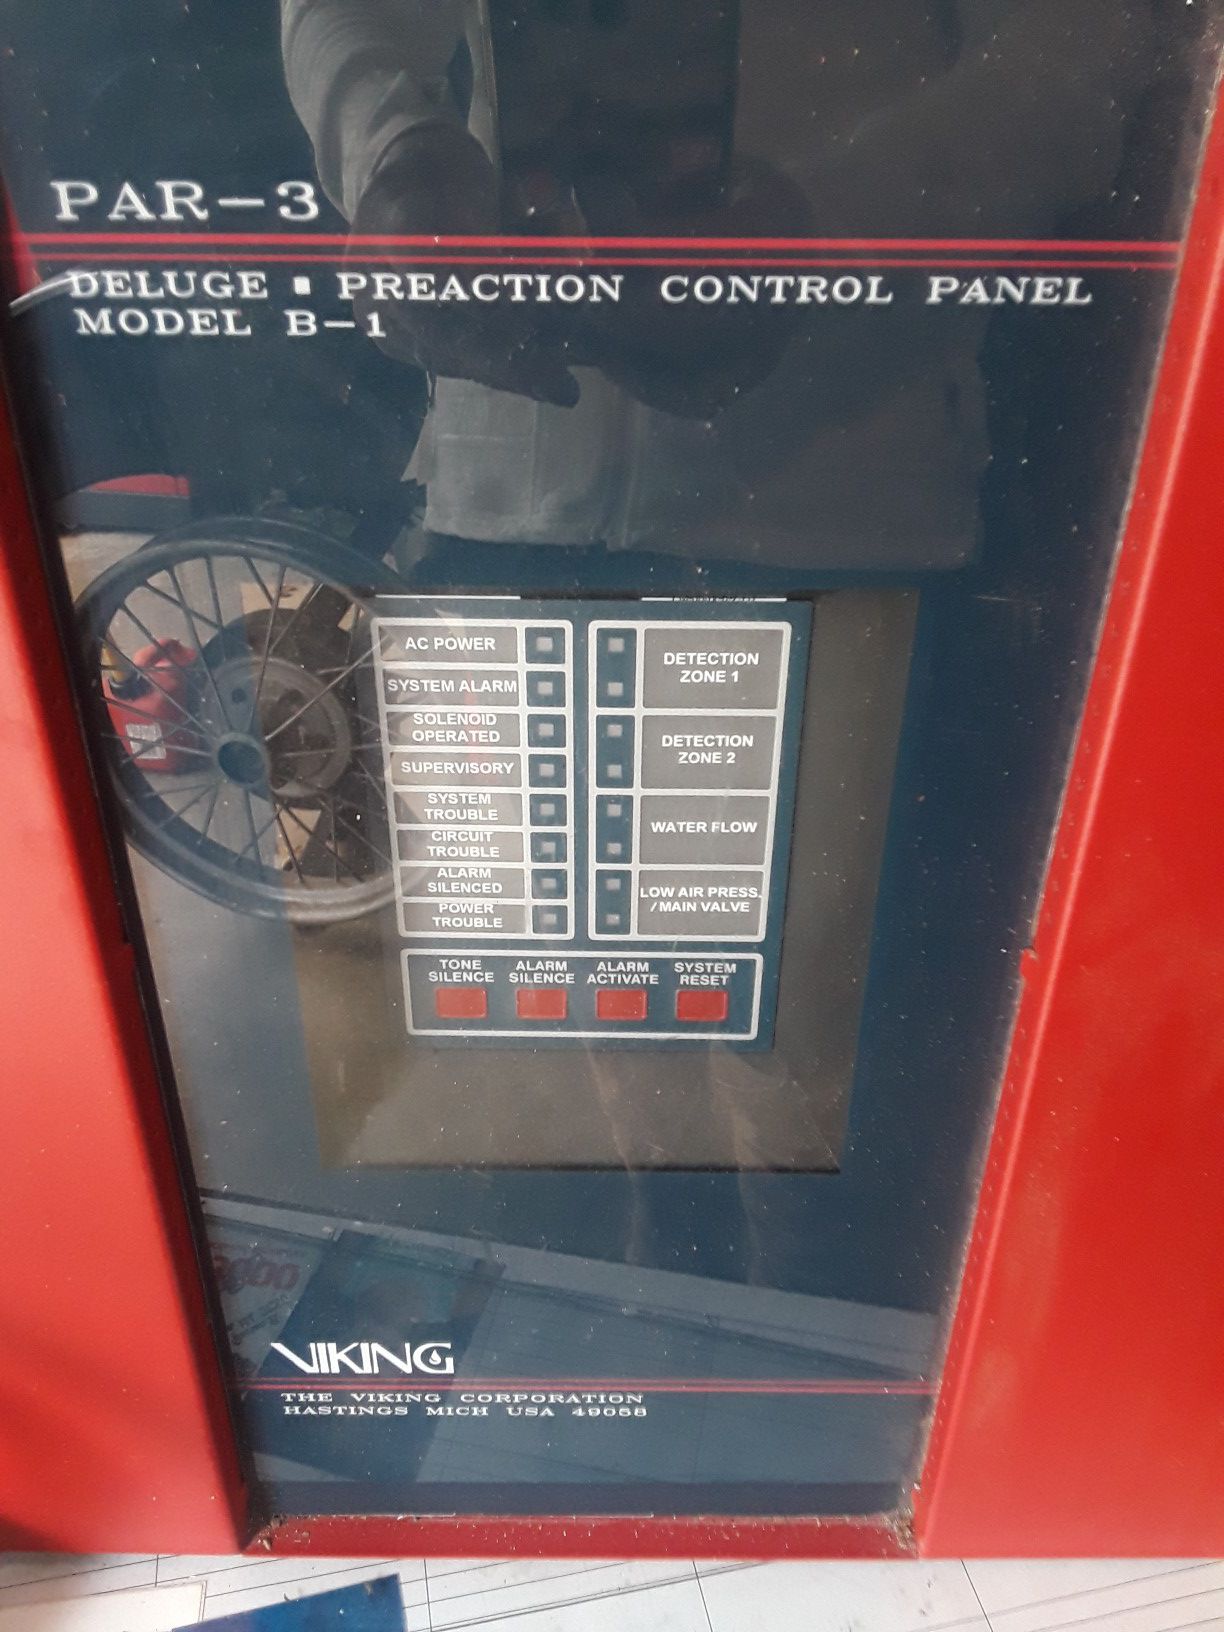 Reaction control panel